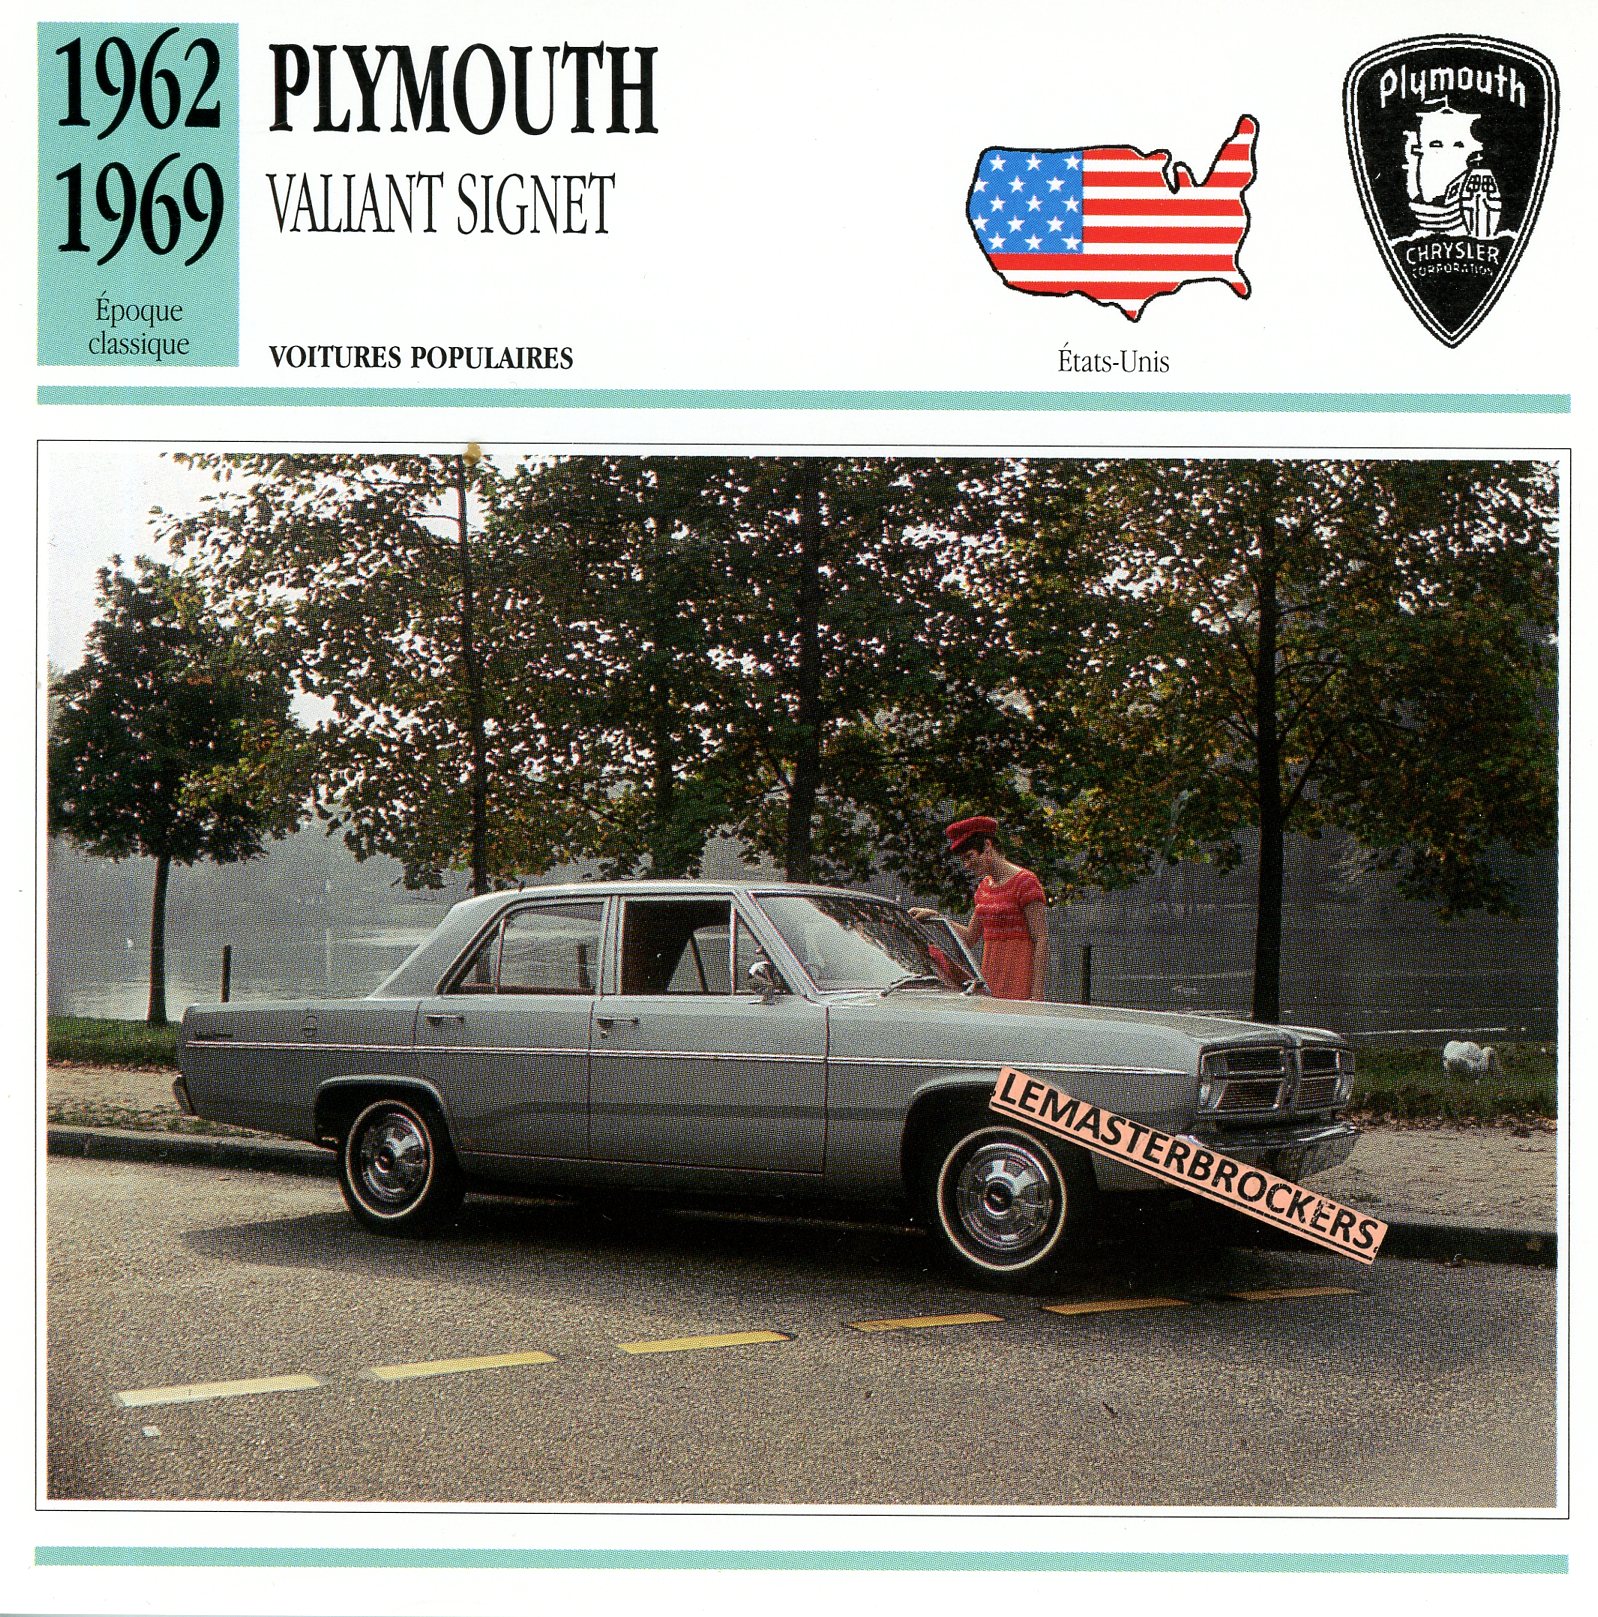 PLYMOUTH-VALLIANT-SIGNET-1969-FICHE-AUTO-LEMASTERBROCKERS-ATLAS-ÉDITION